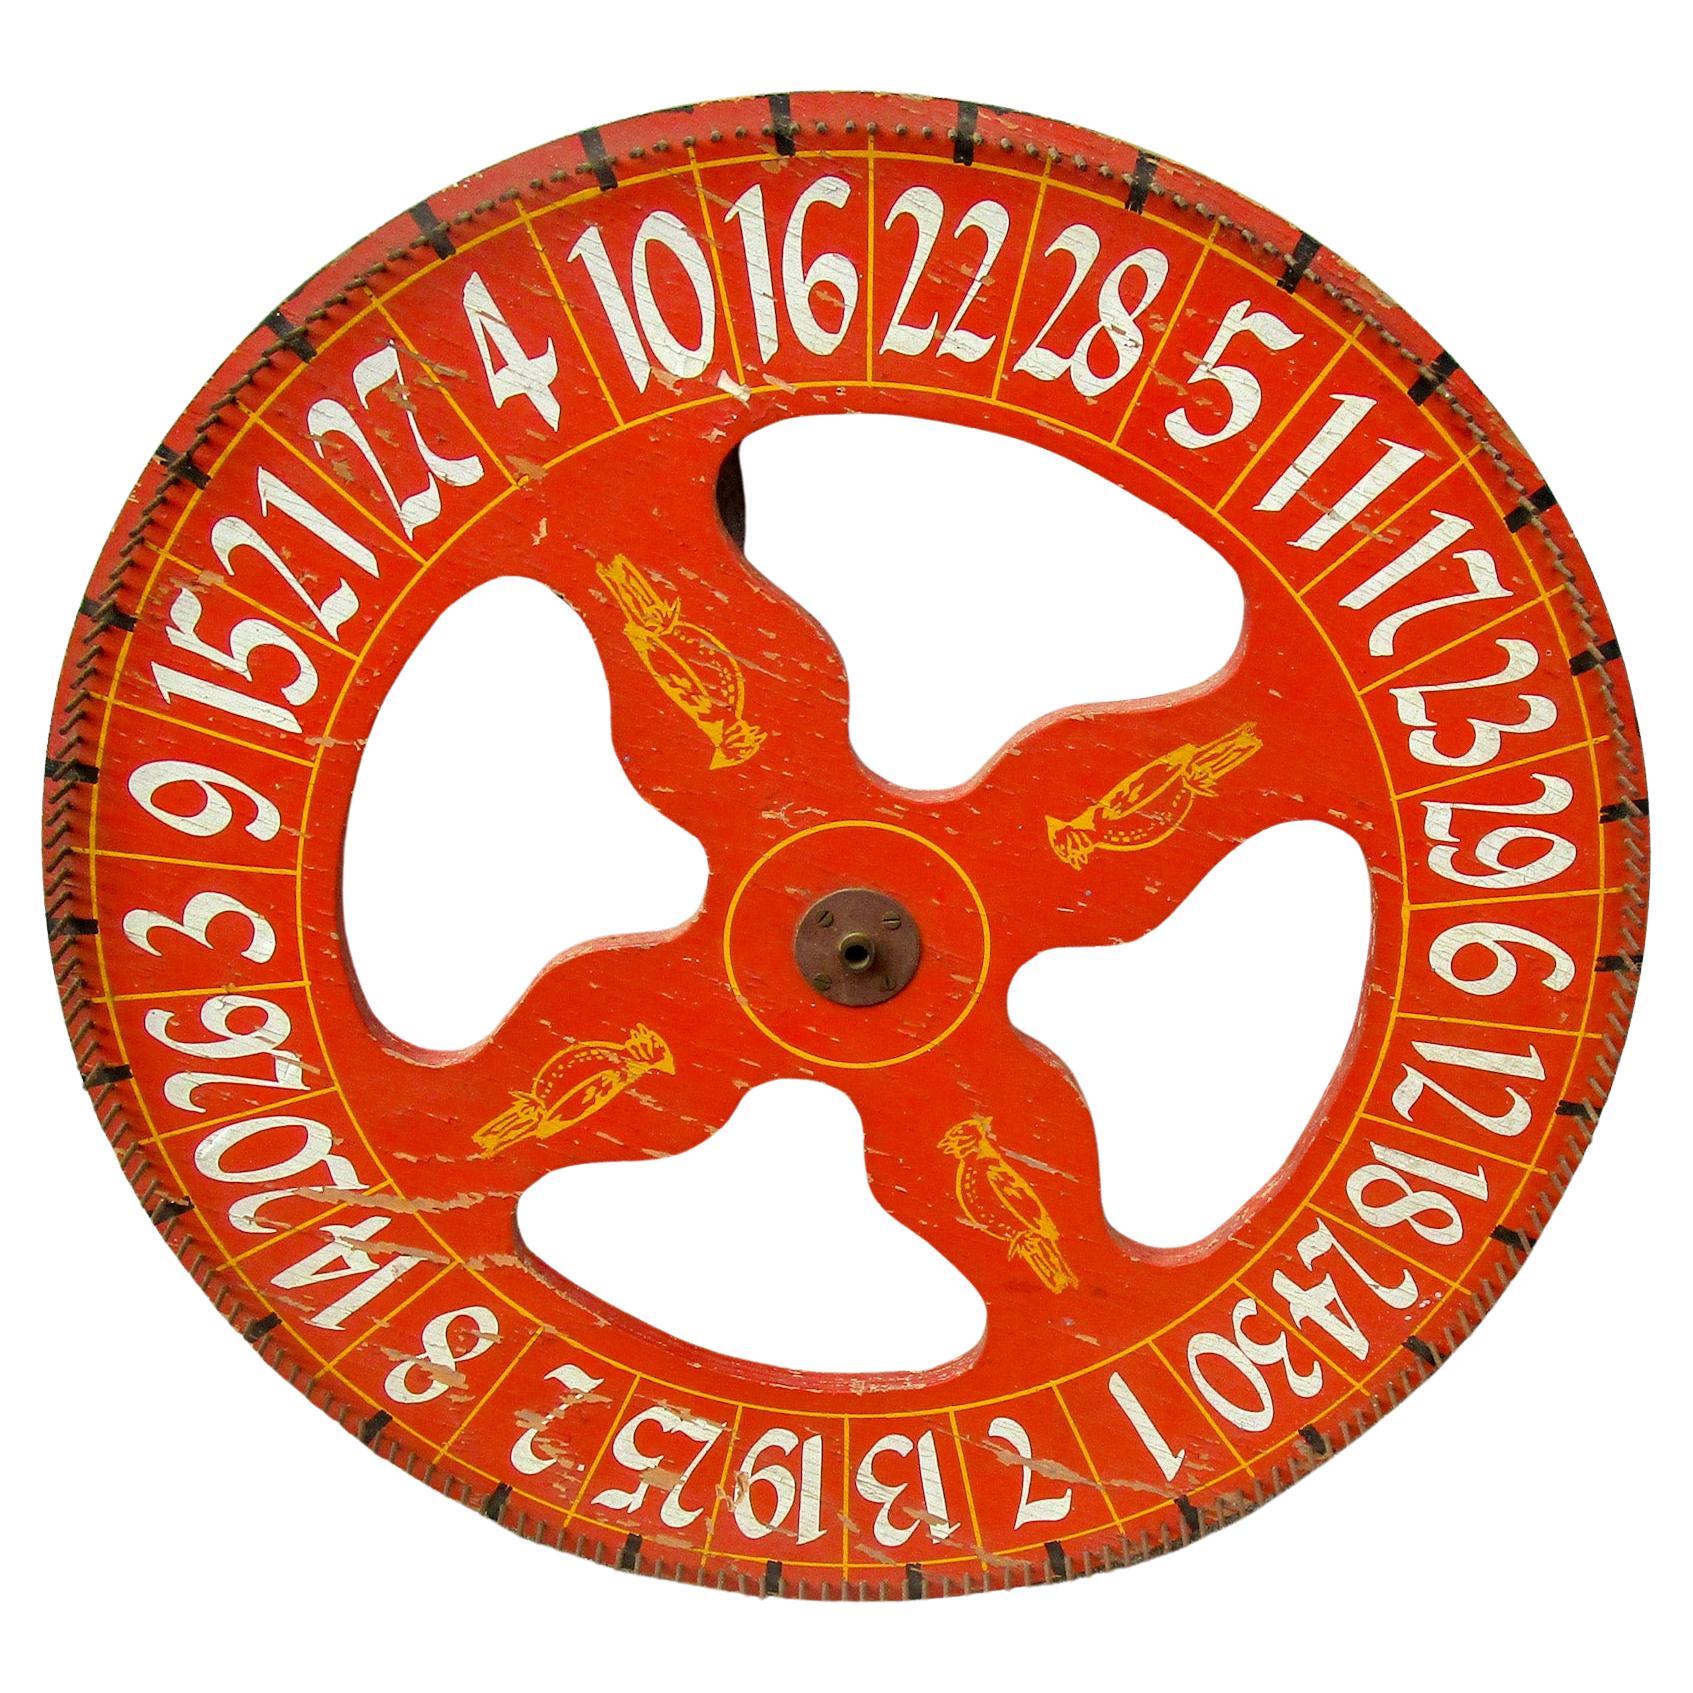 19th C Wooden Folk Art Gaming Wheel with Original Red Paint & Cardinal Design